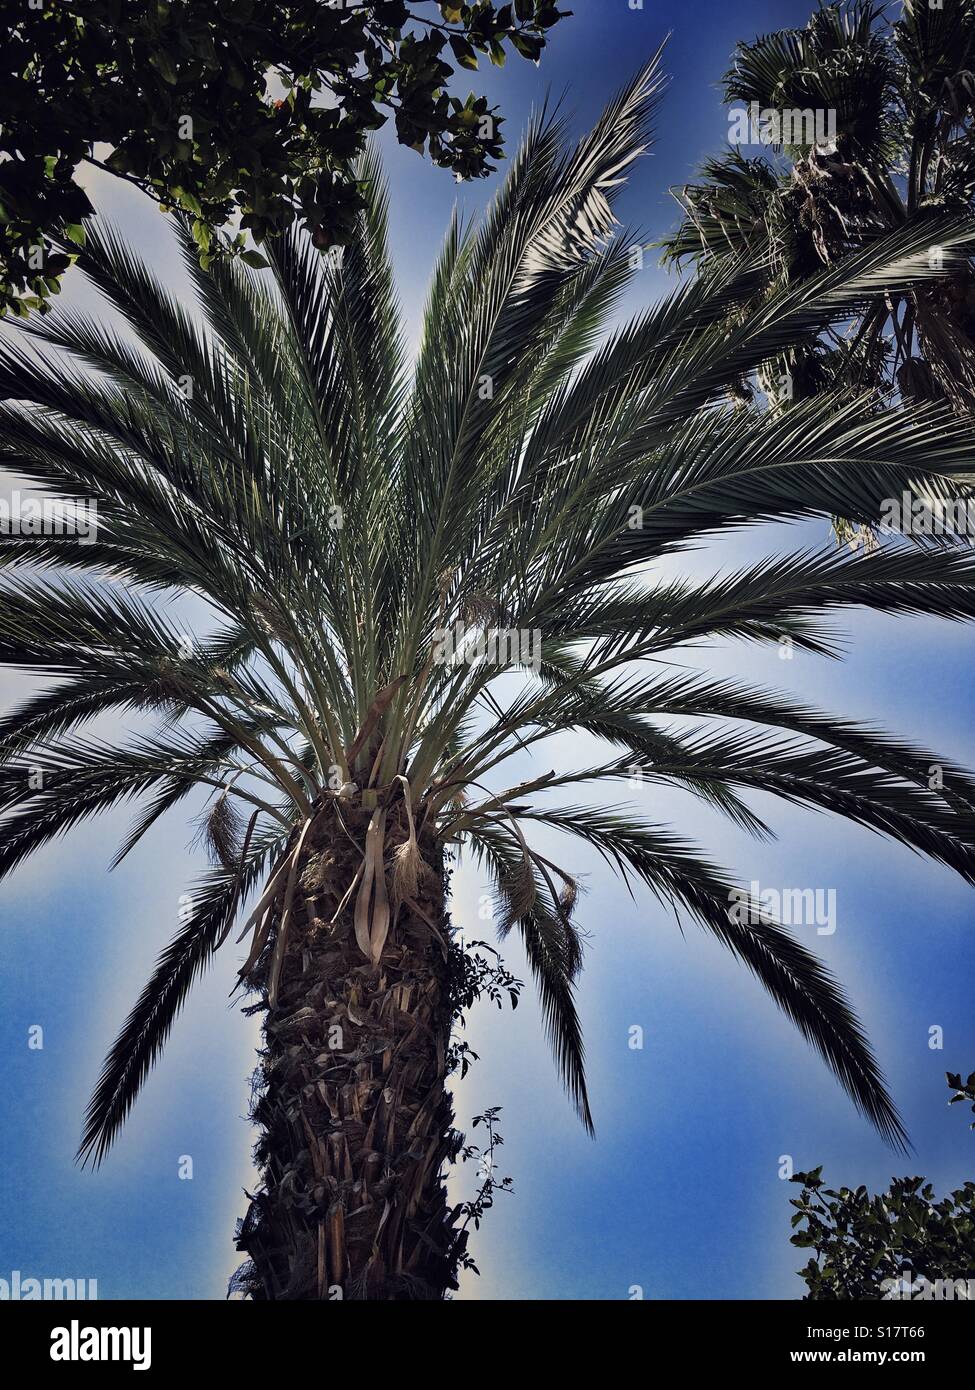 Long angle view of palm tree Stock Photo